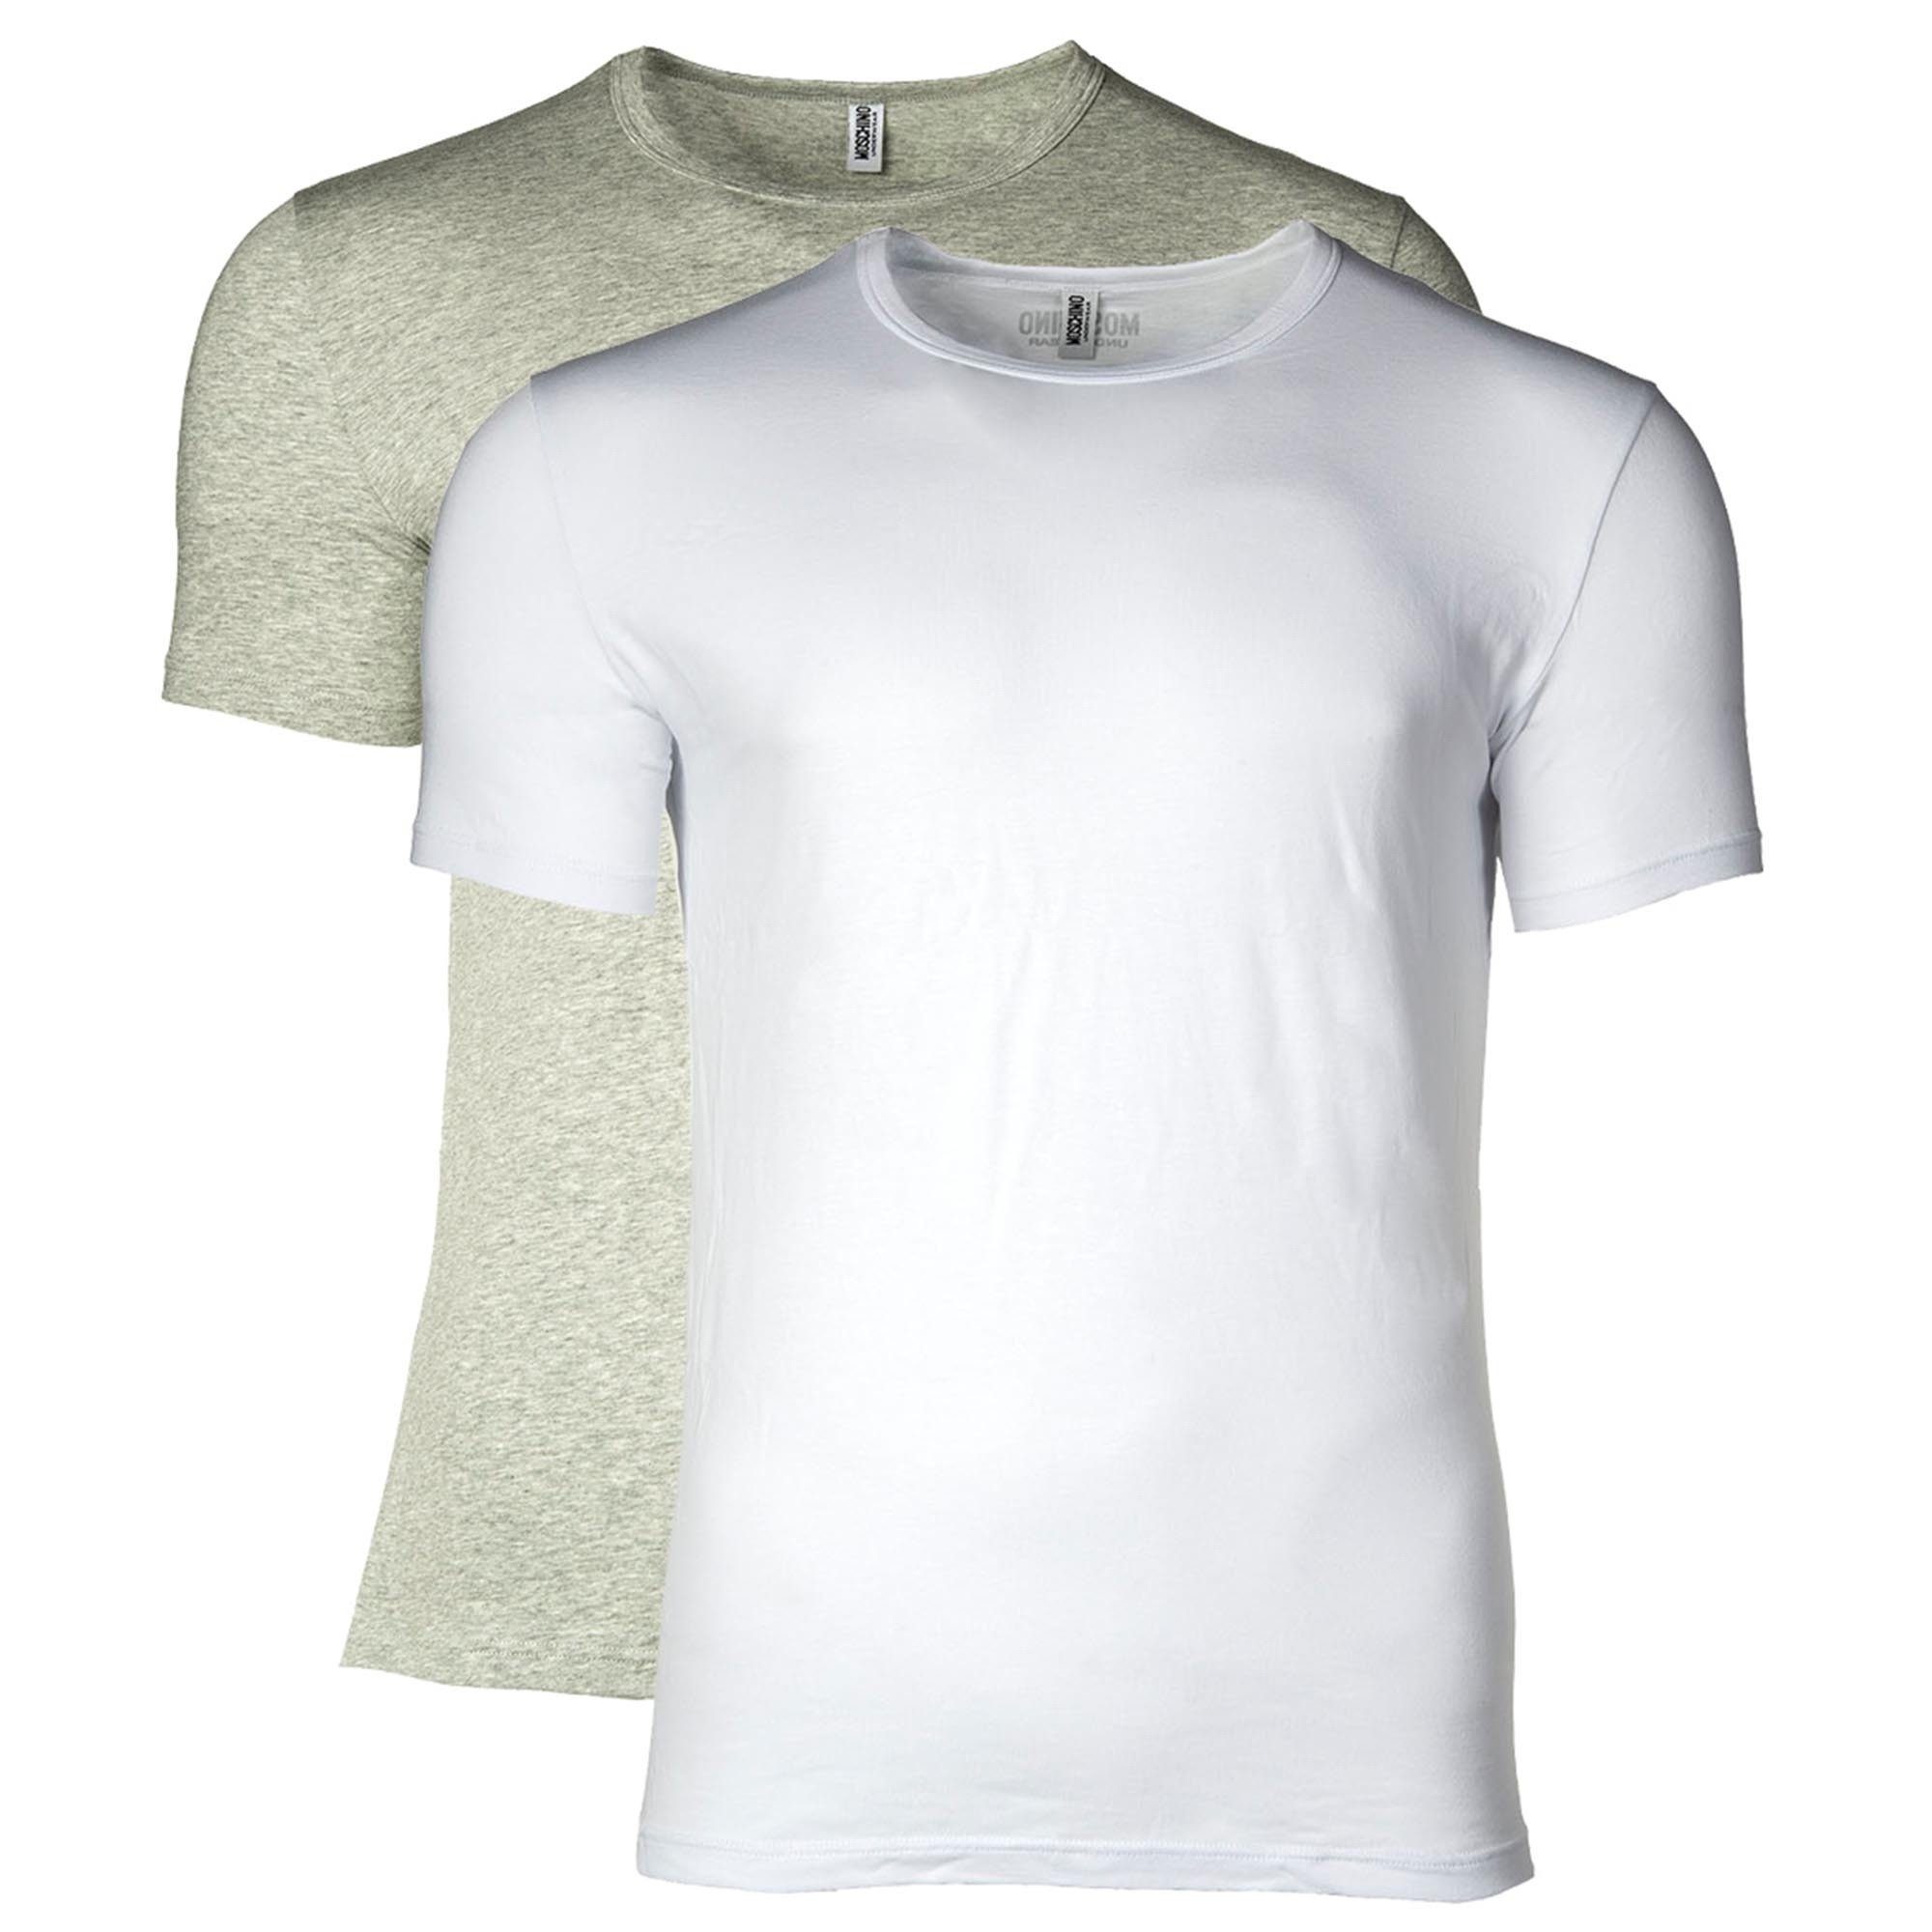 Moschino T-Shirt Herren T-Shirt 2er Pack - Crew Neck, Rundhals Grau/Weiß